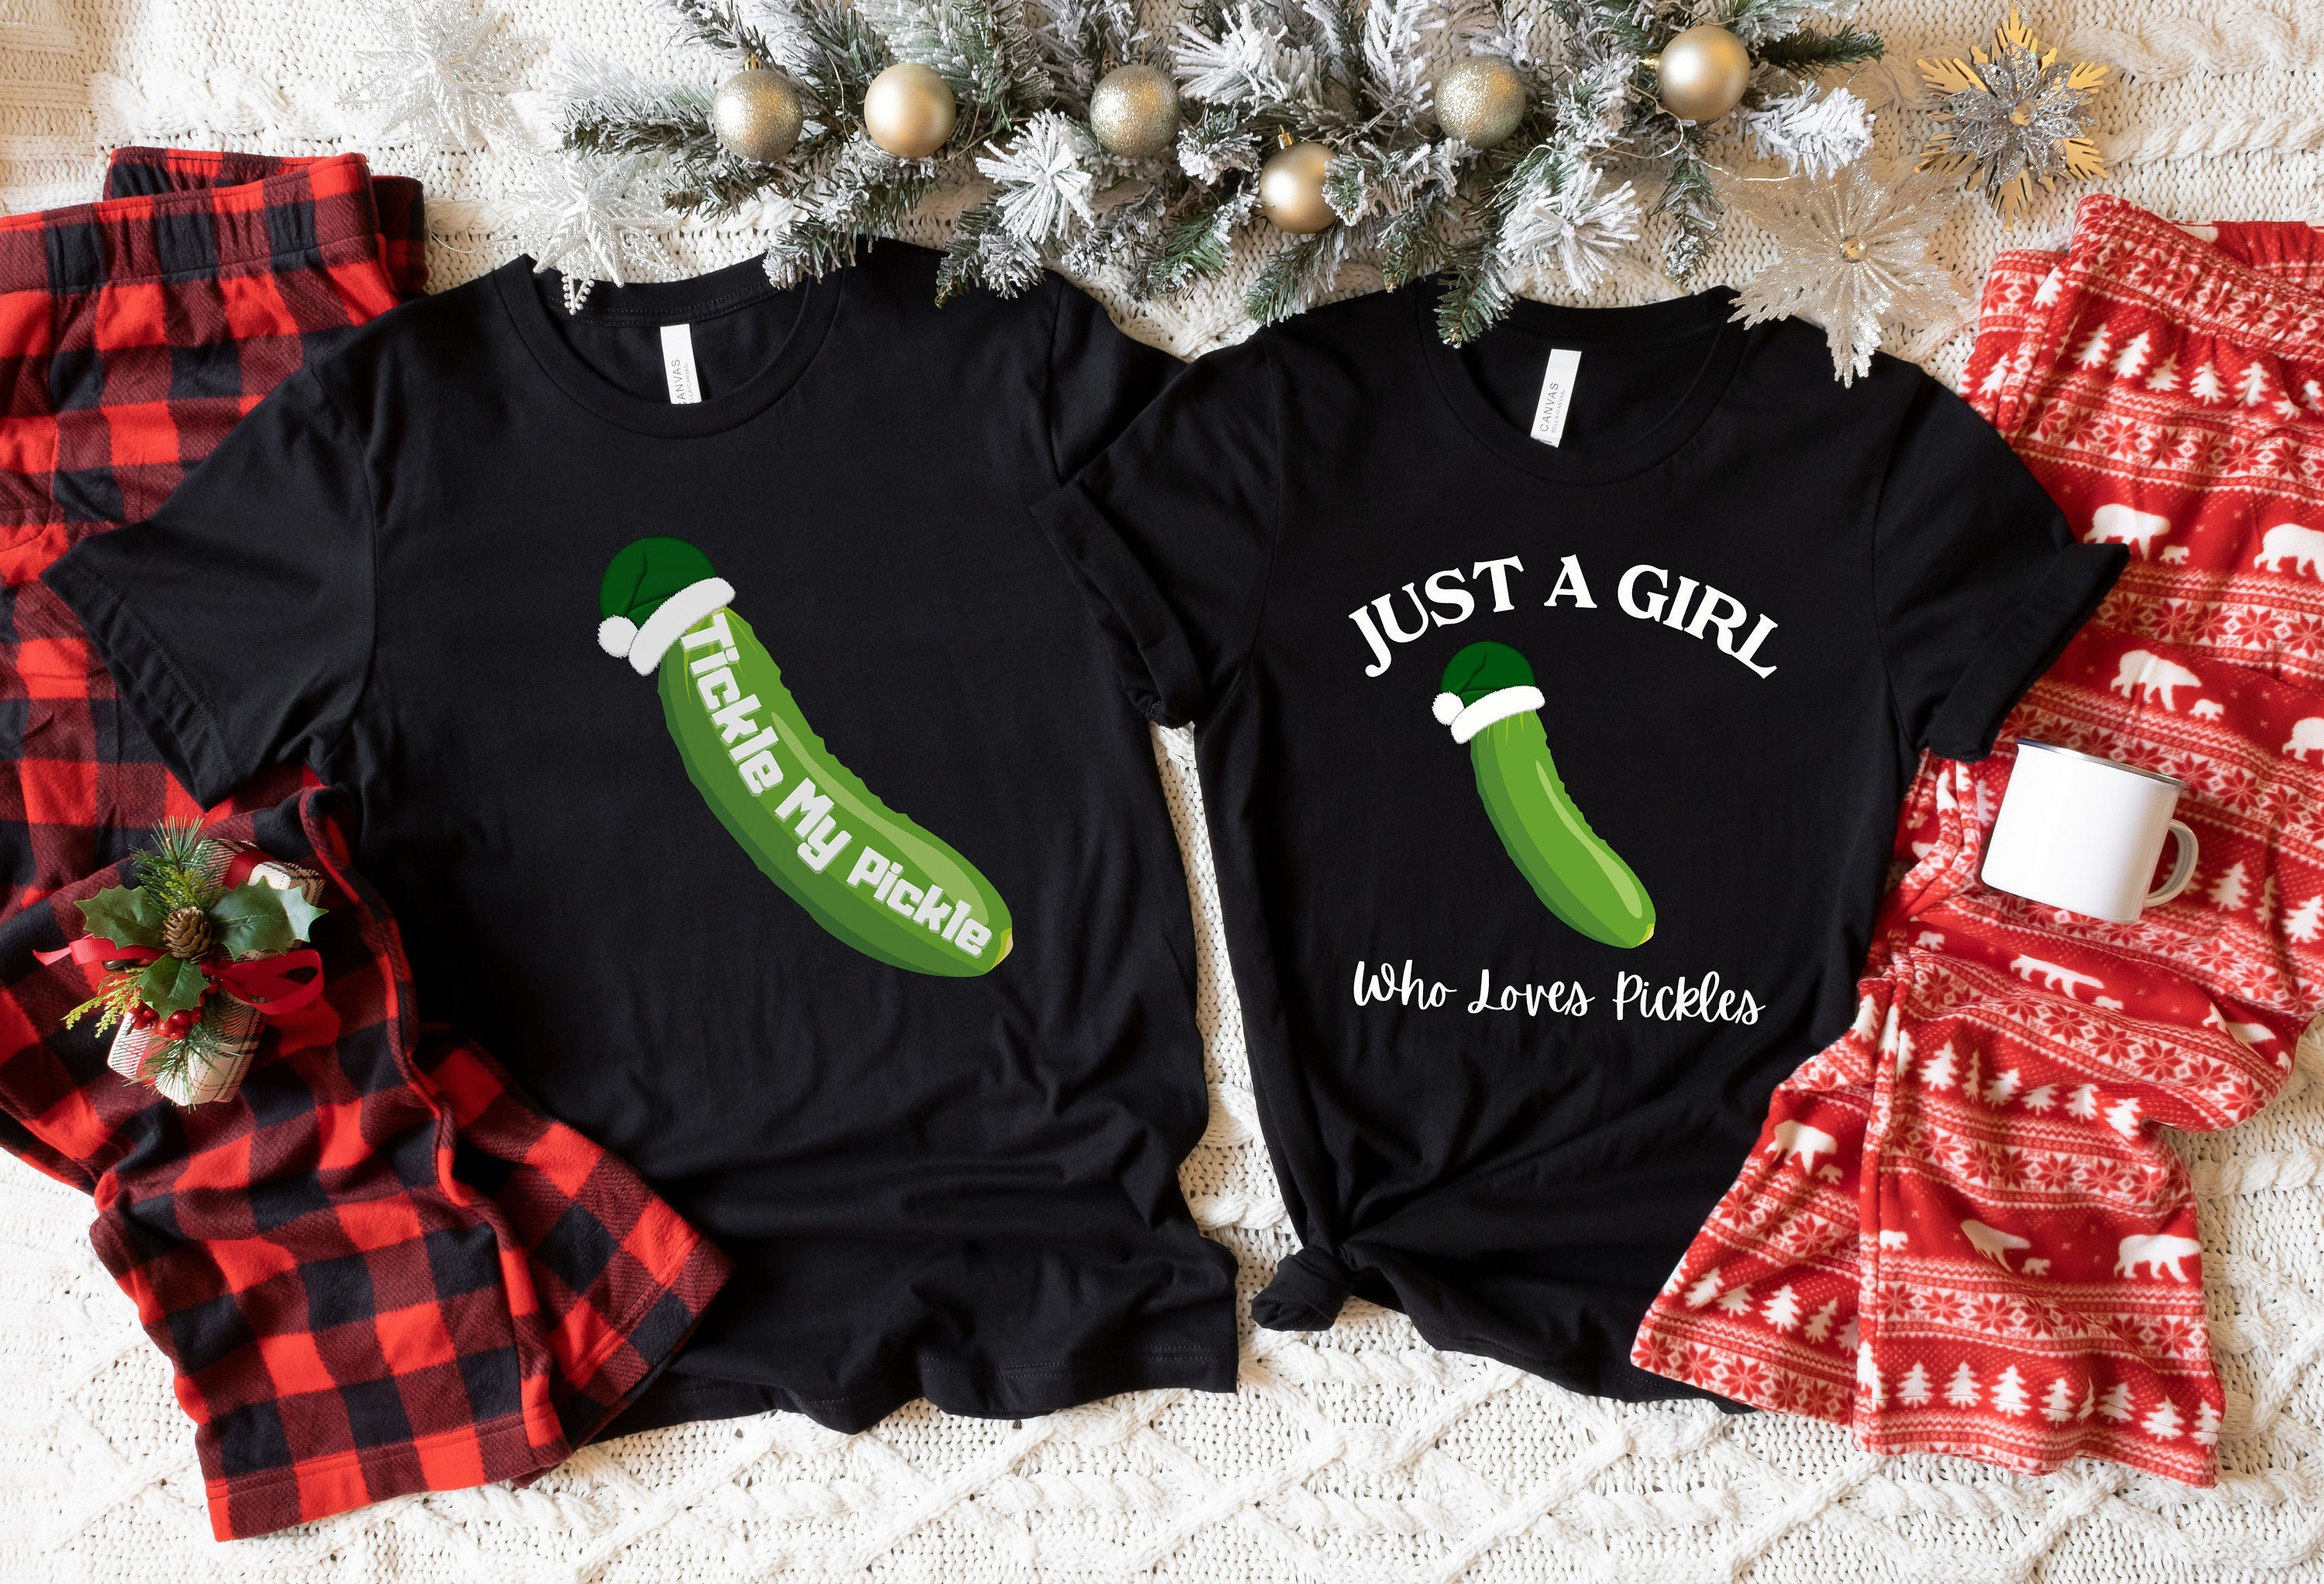 Funny Couple Christmas Shirts Boyfriend Girlfriend Joke image